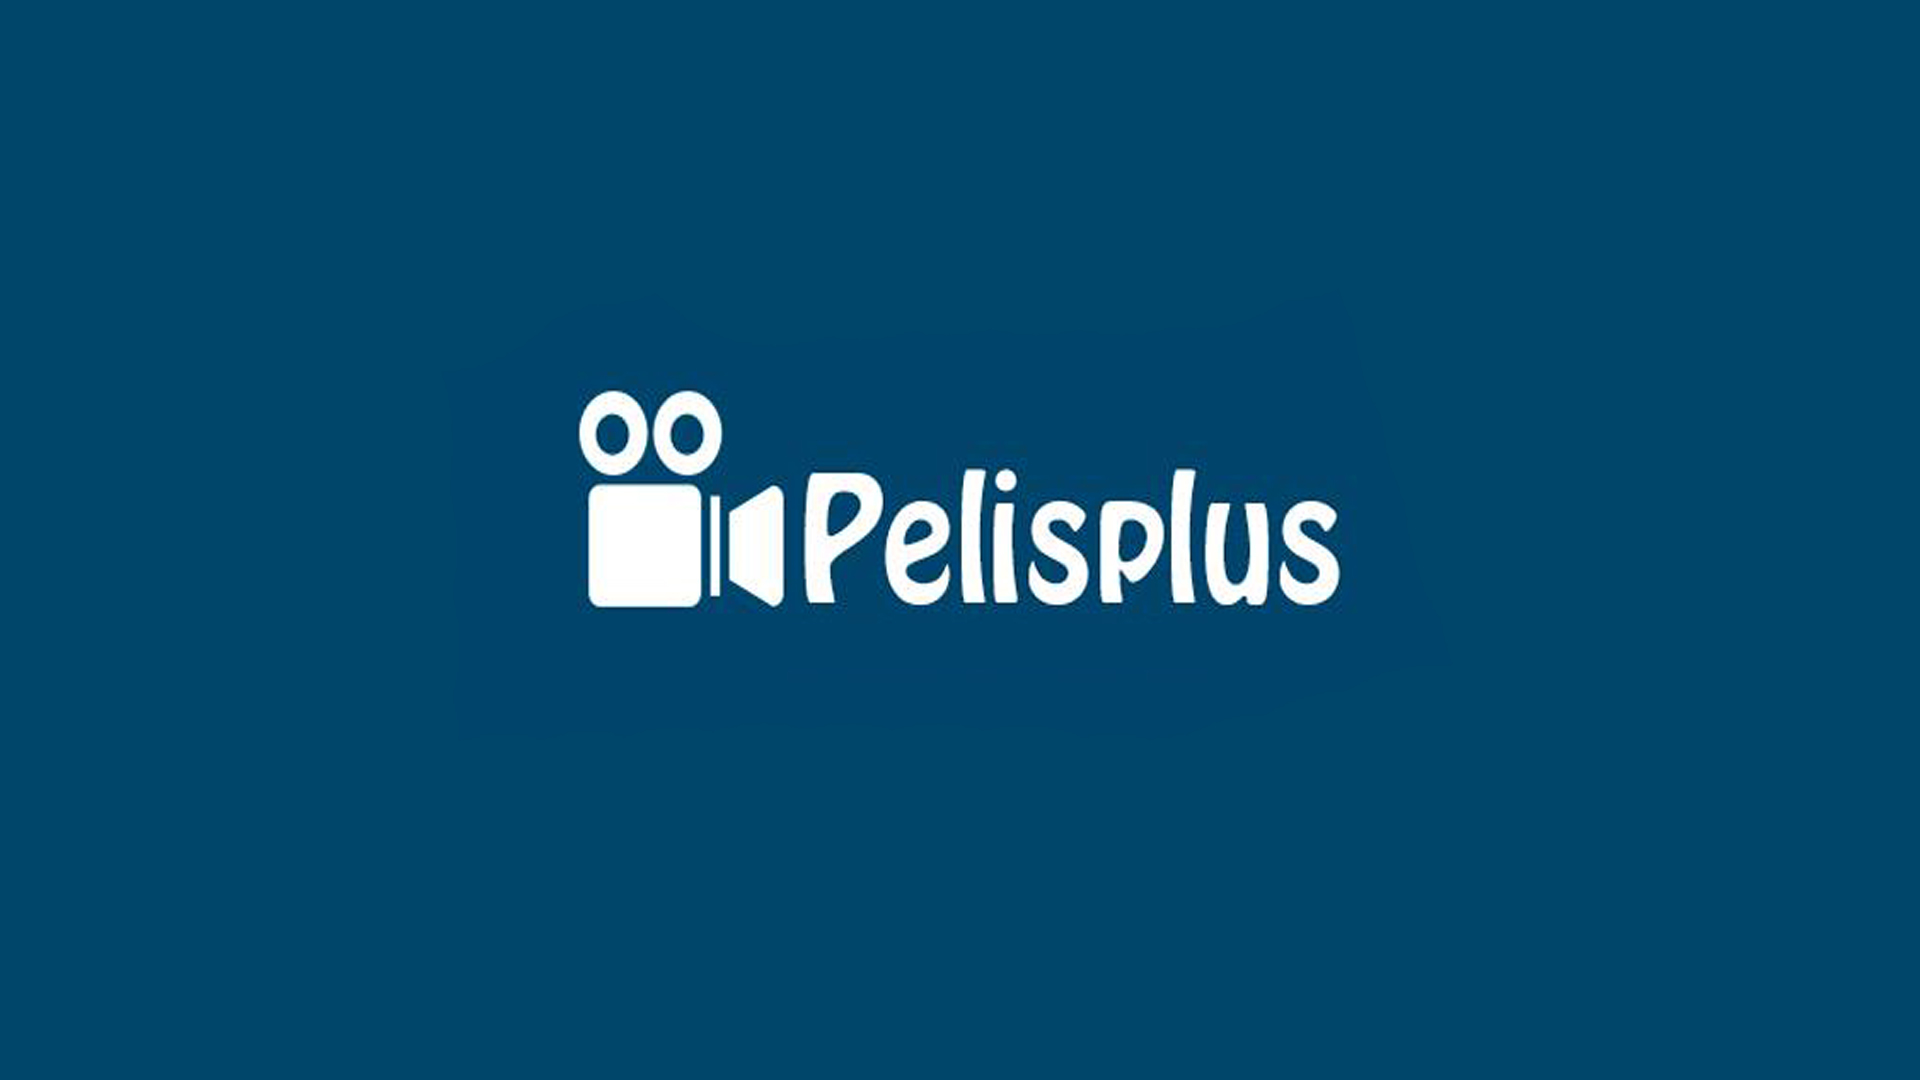 PelisPlus mobile app benefits